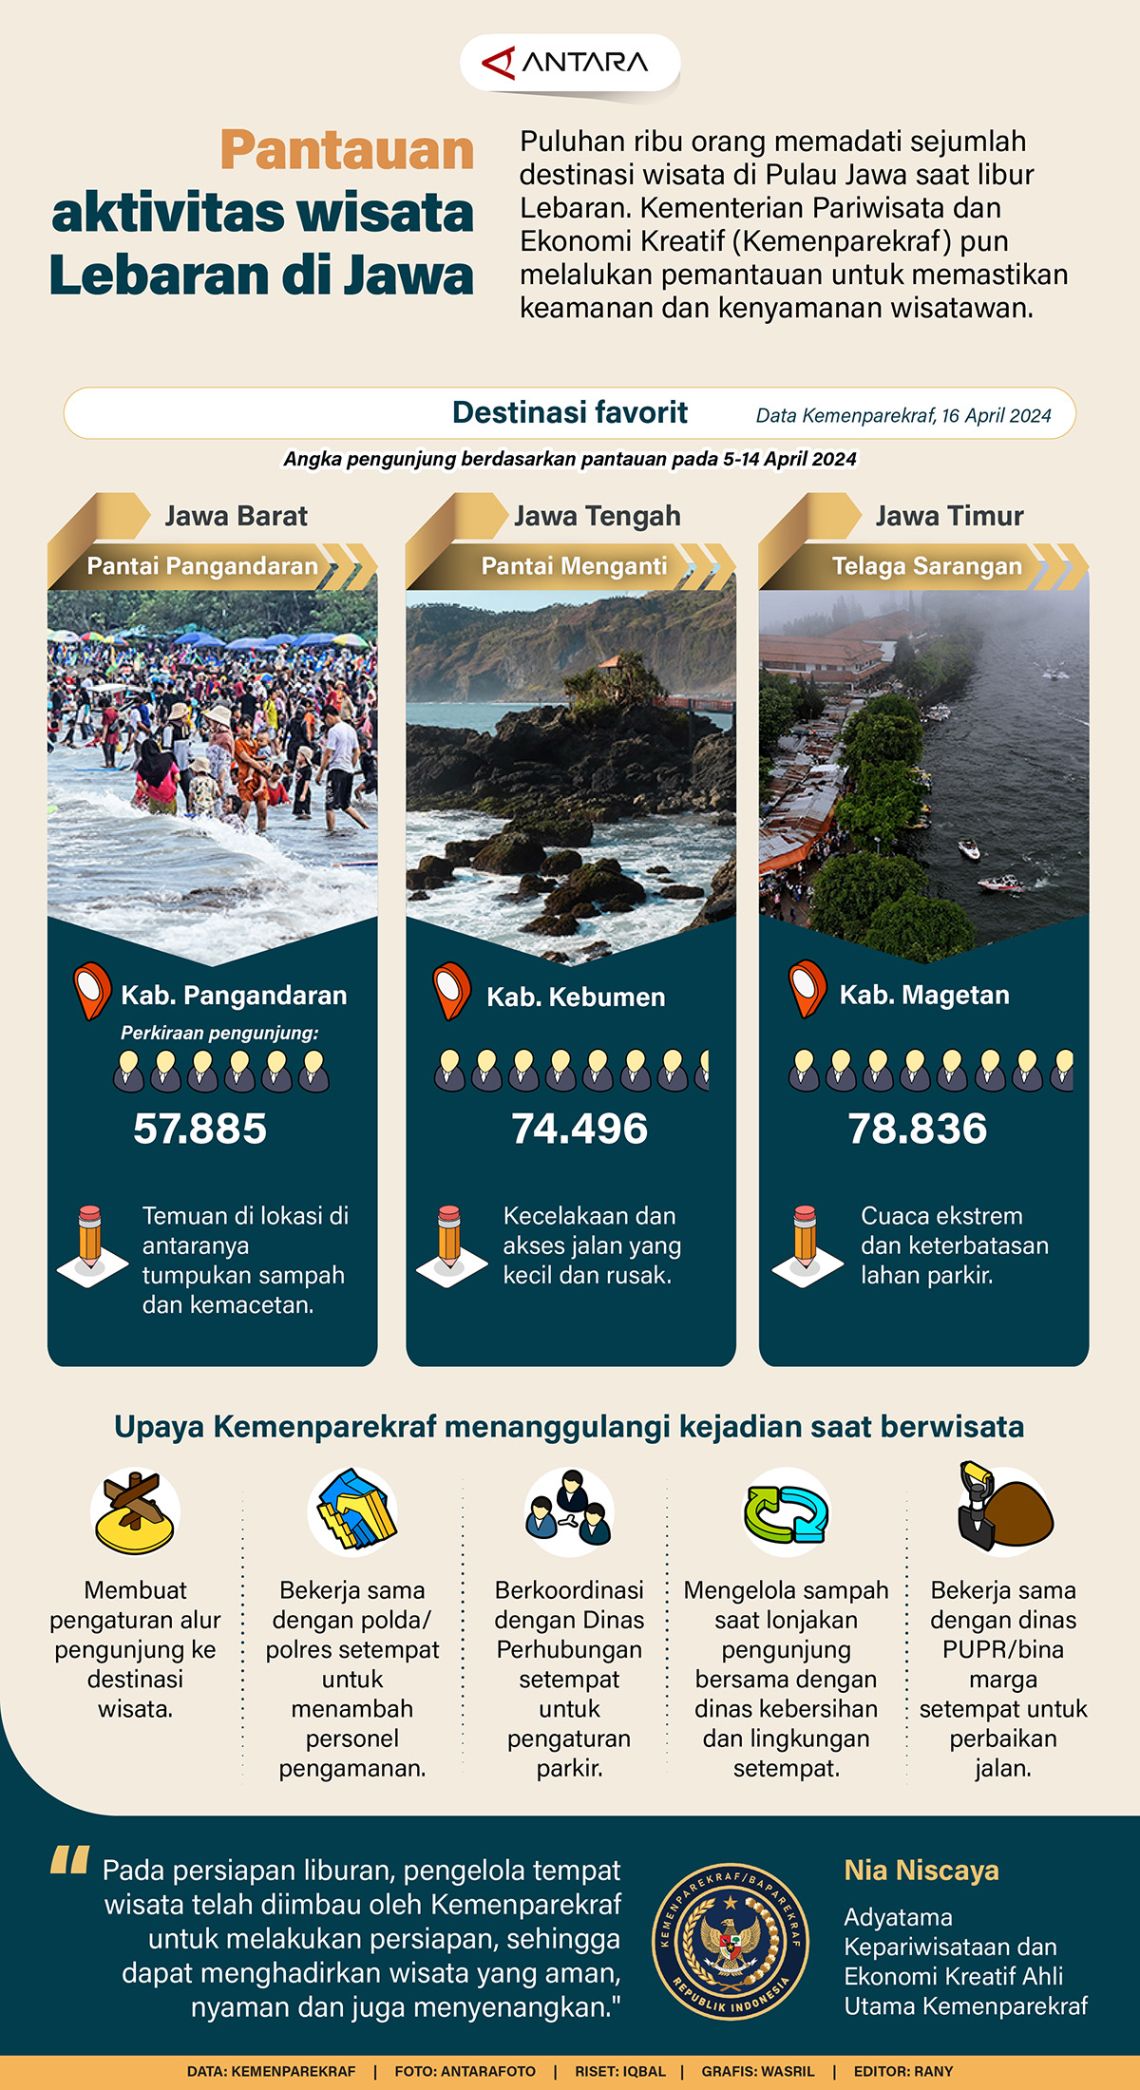 Pantauan aktivitas wisata lebaran di Jawa